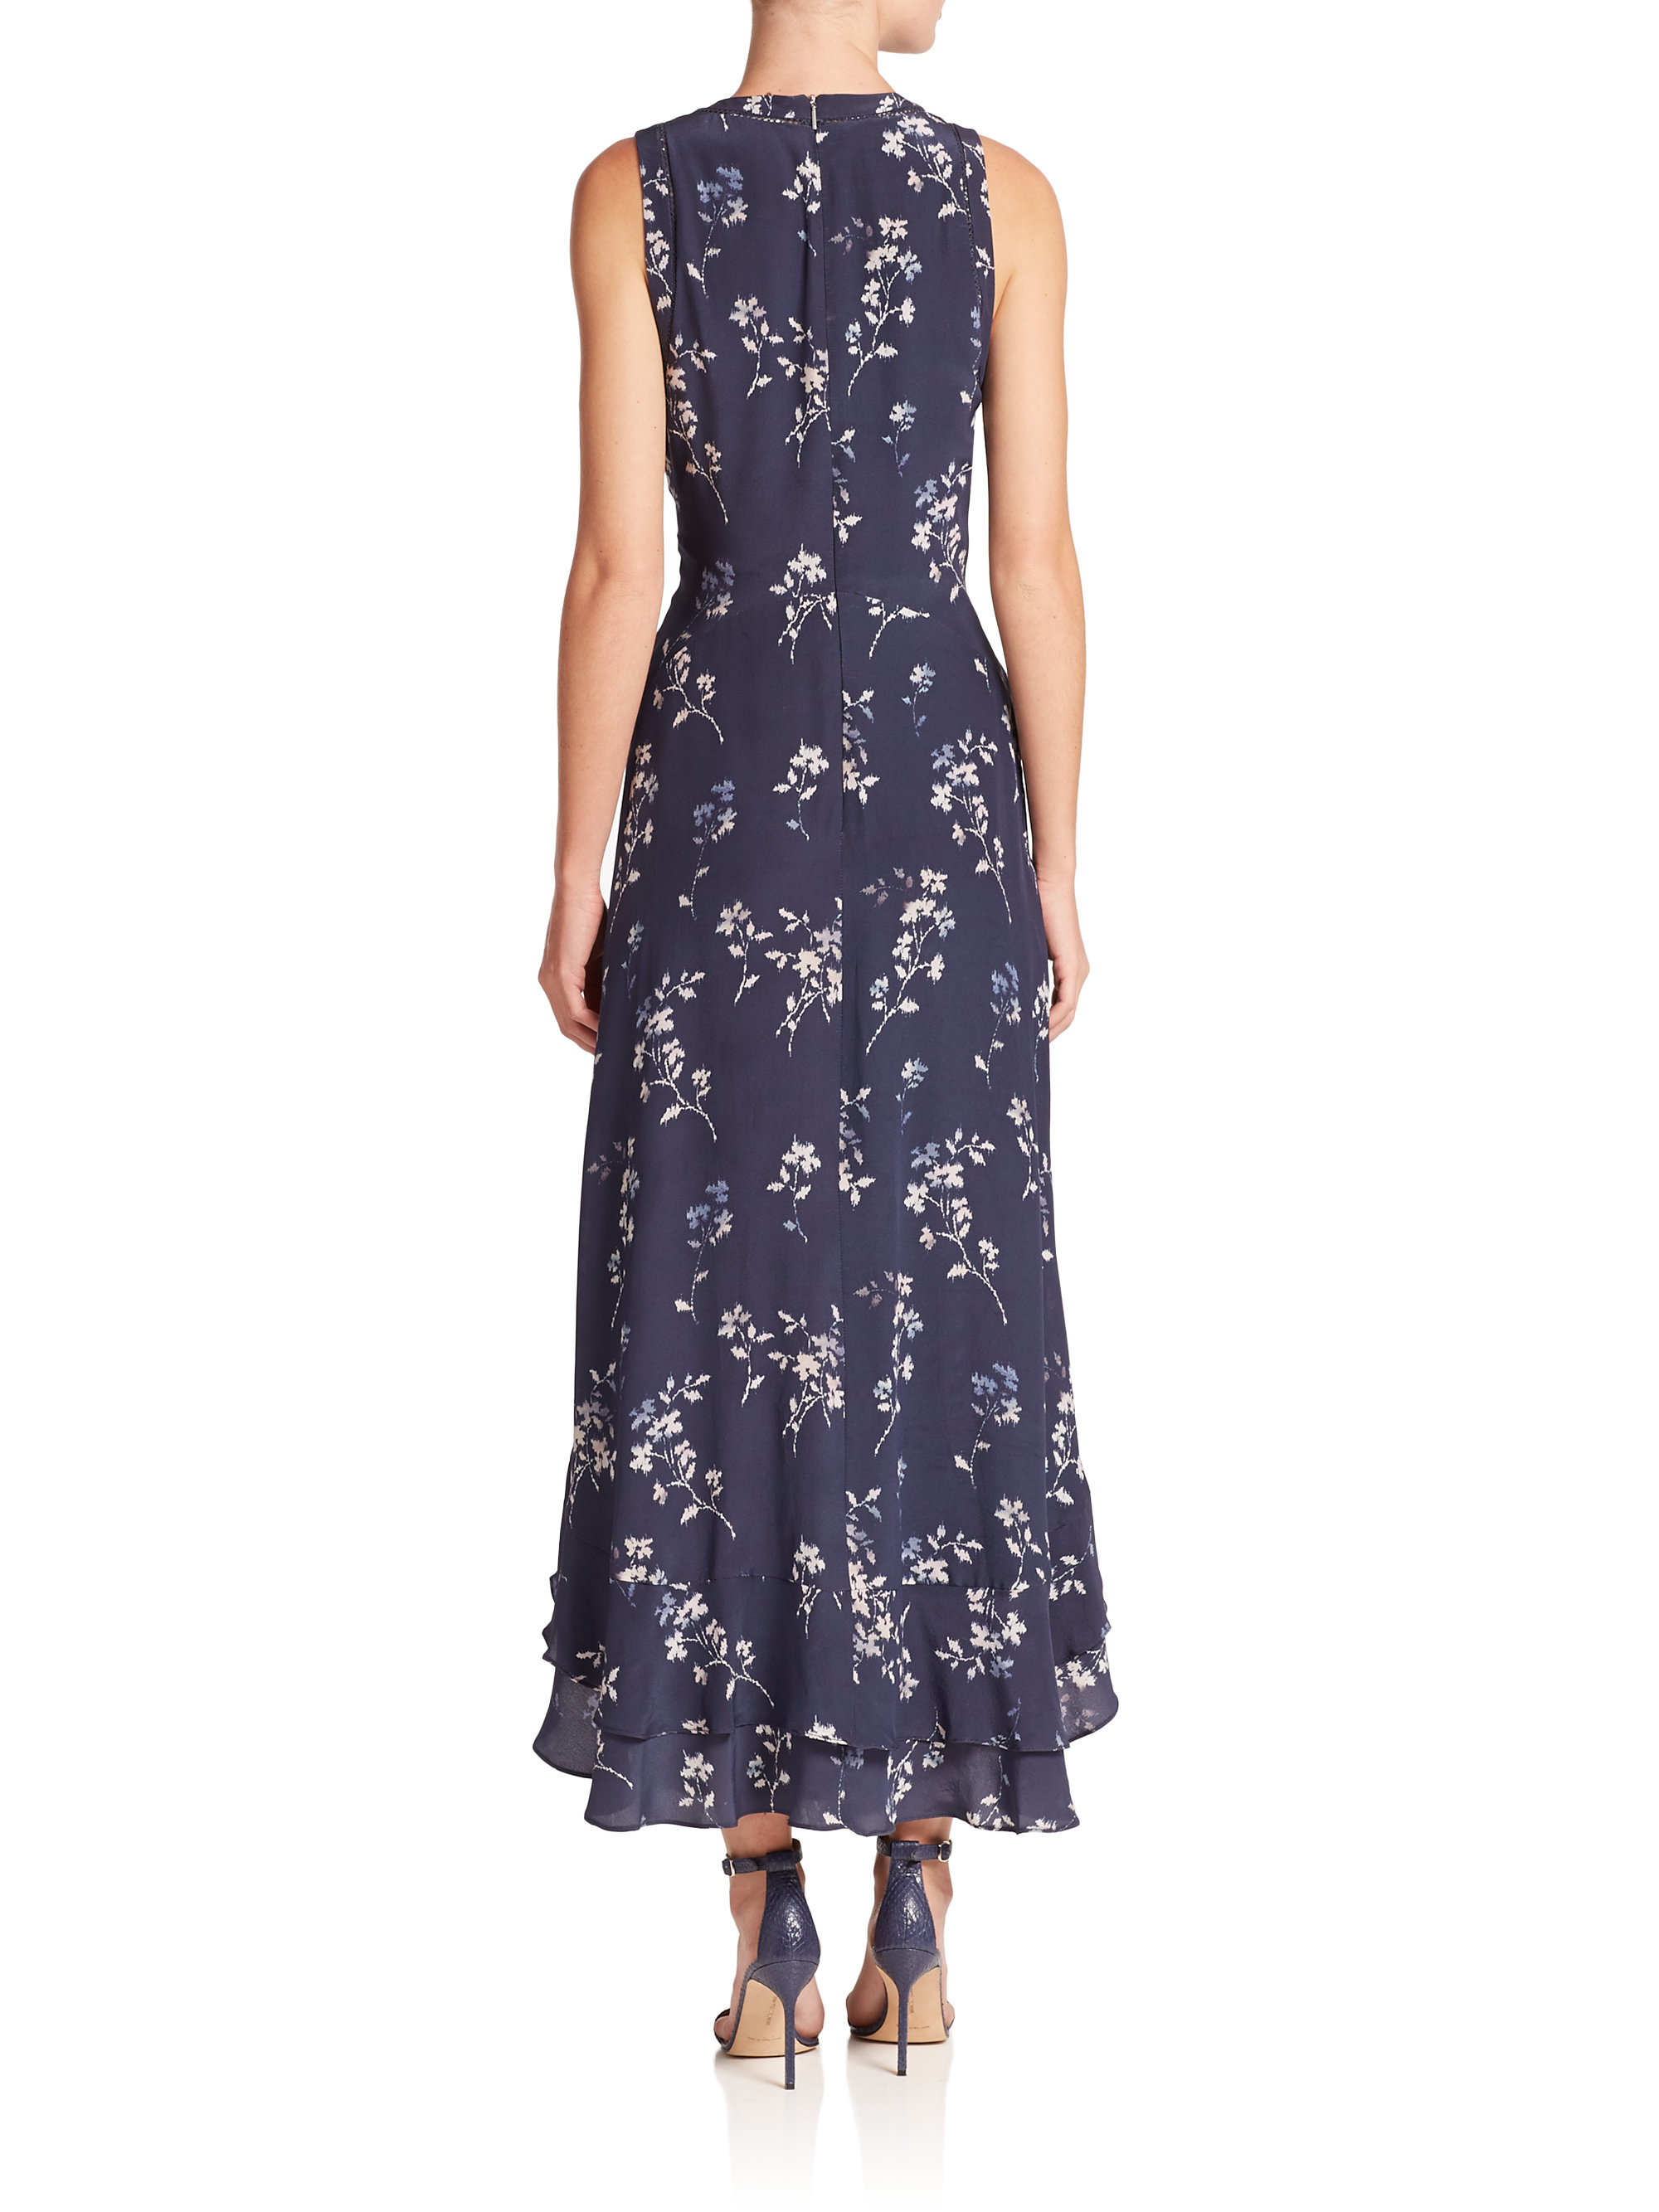 Lyst - Rebecca Taylor Silk Floral-print Ruffle Maxi Dress in Blue